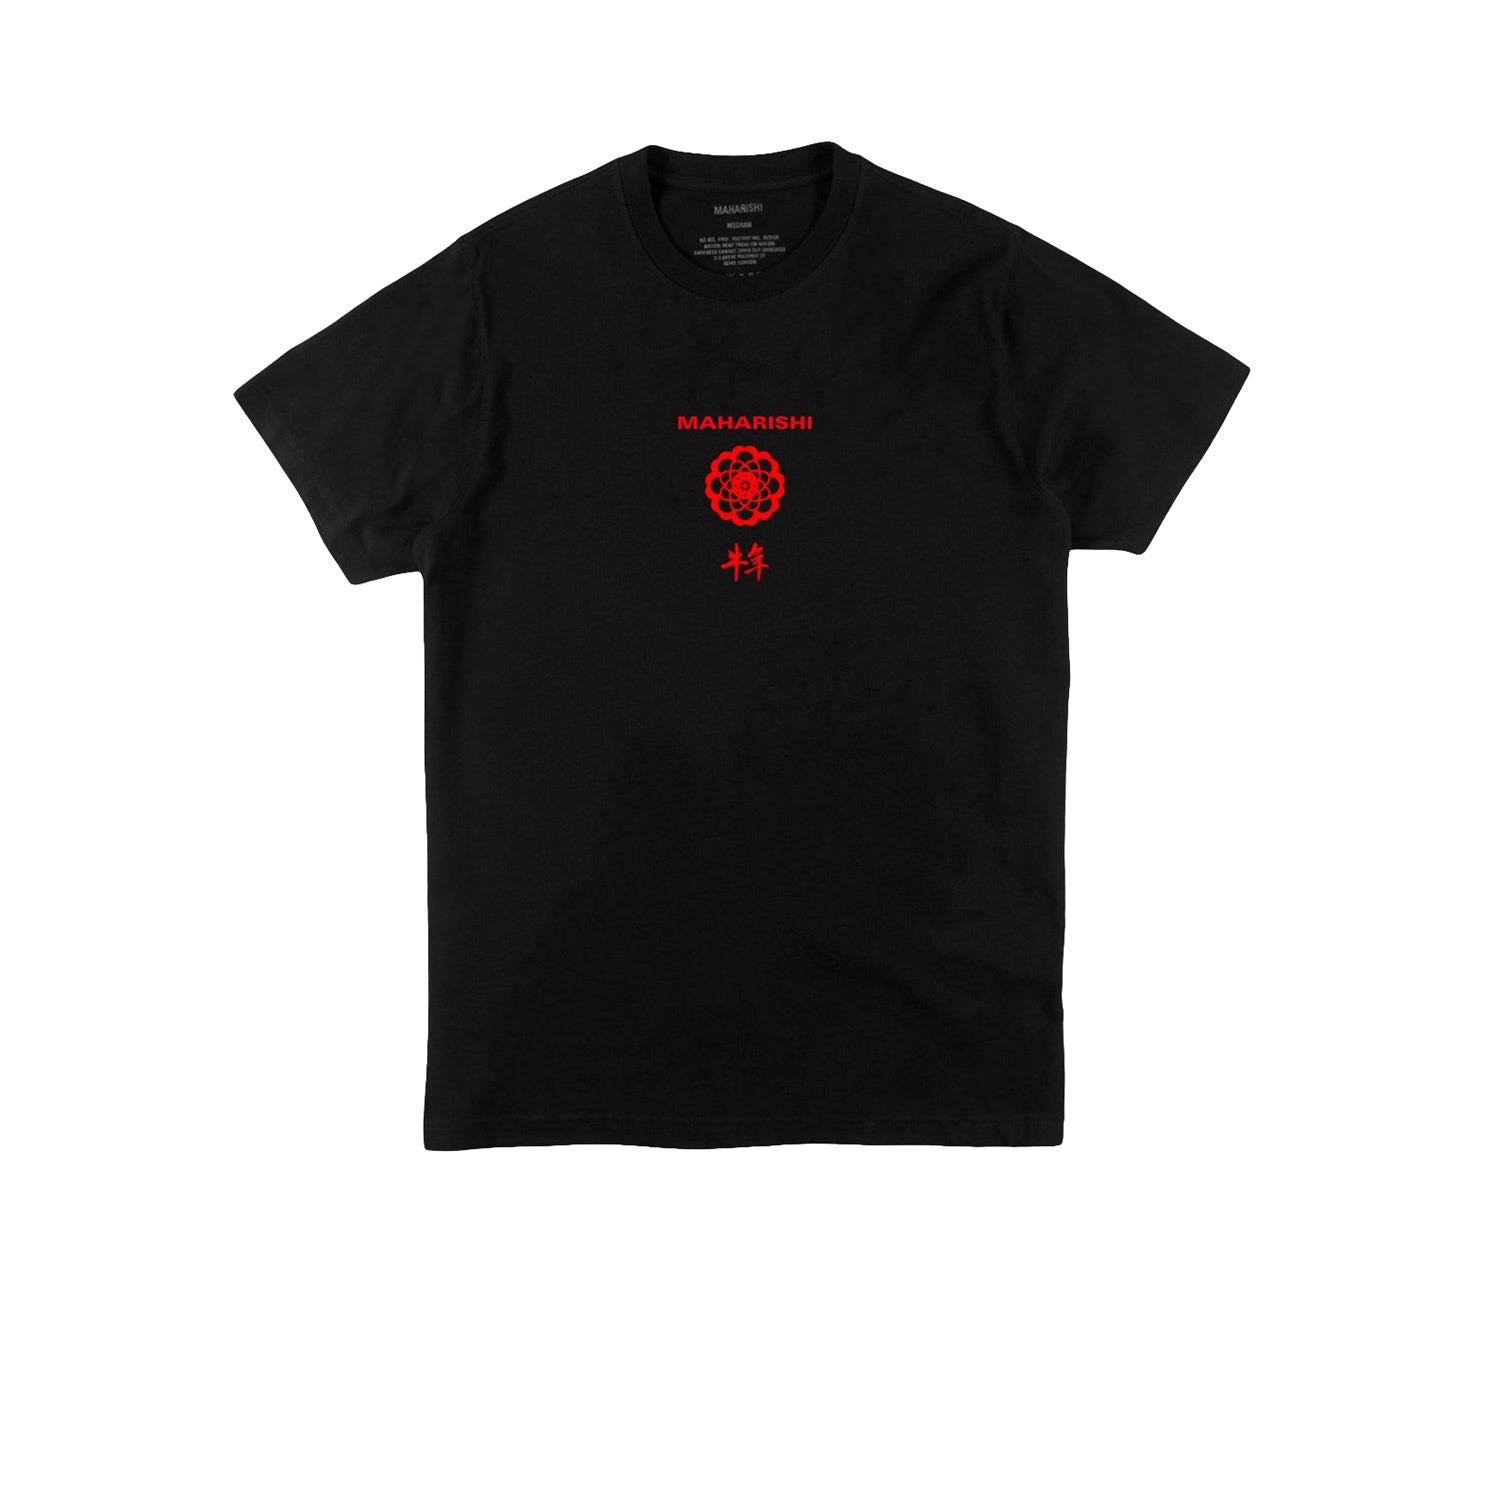 Maharishi Paper Cut OX T-Shirt Organic Jersey 190 Black